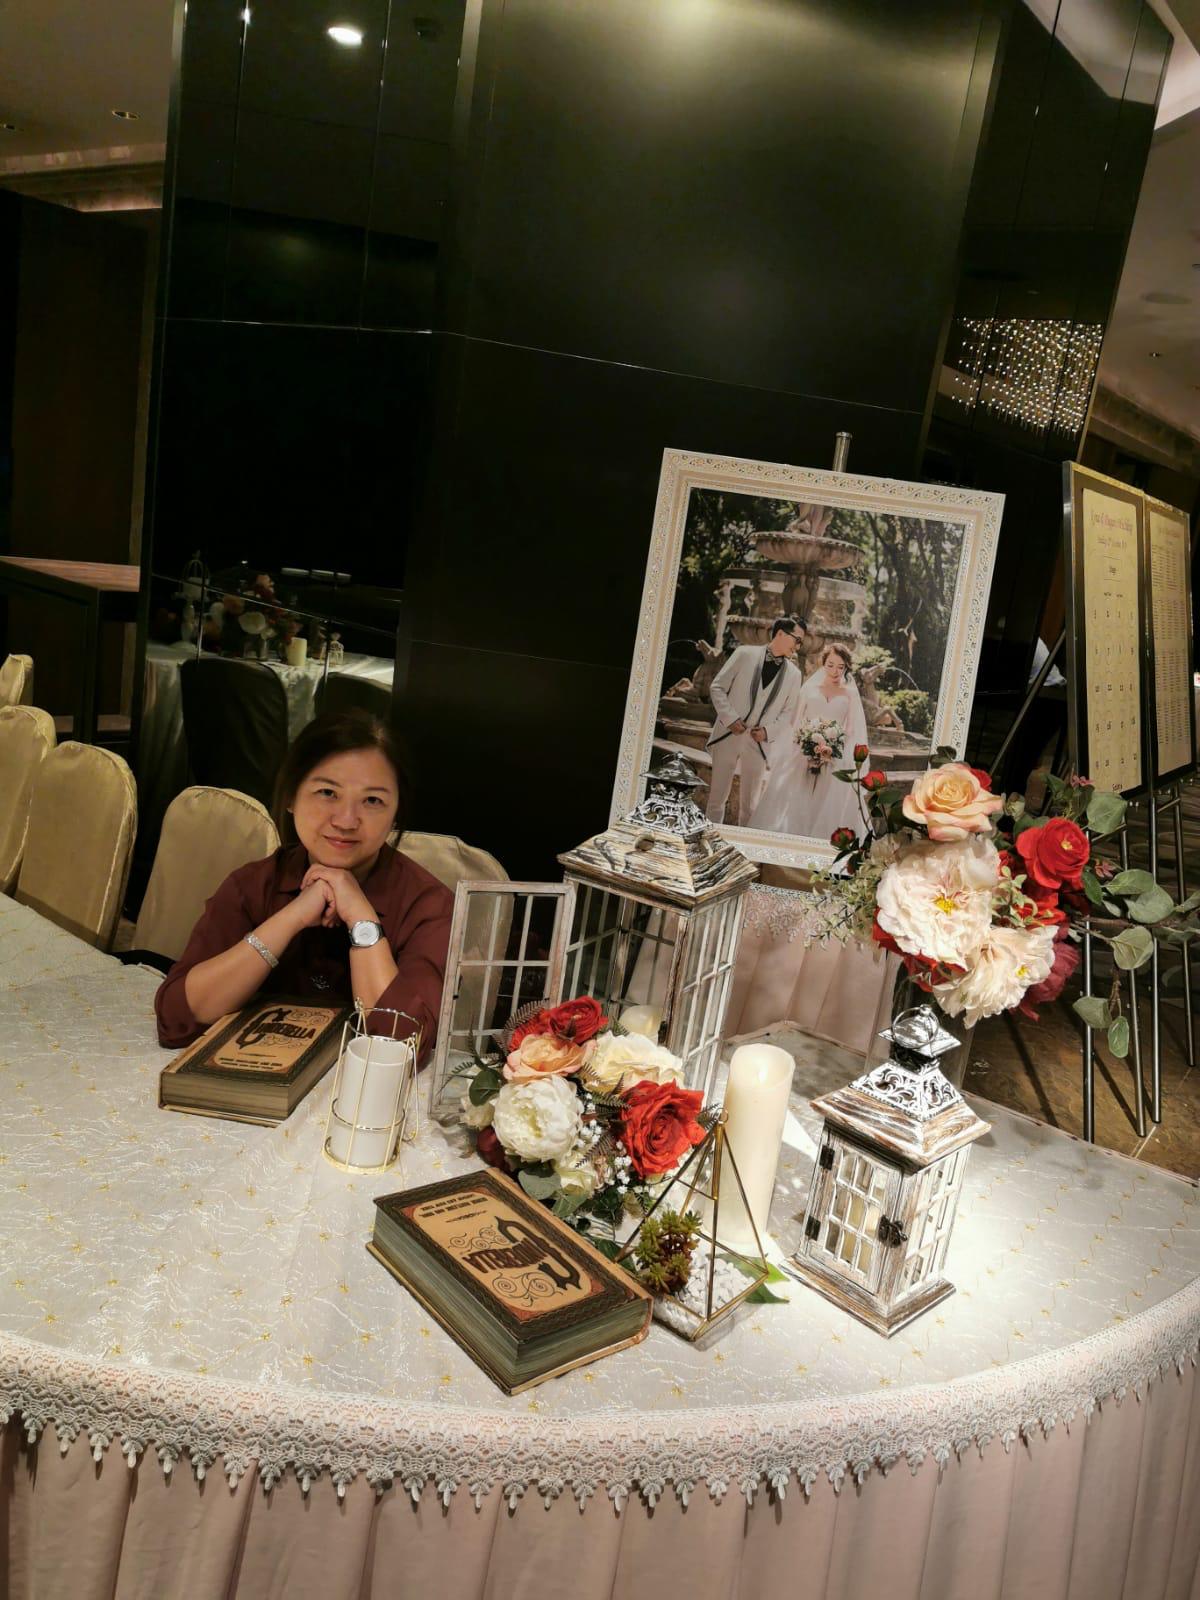 Queeny Ng婚禮統籌師工作紀錄: JW Marriott - 中式婚禮統籌